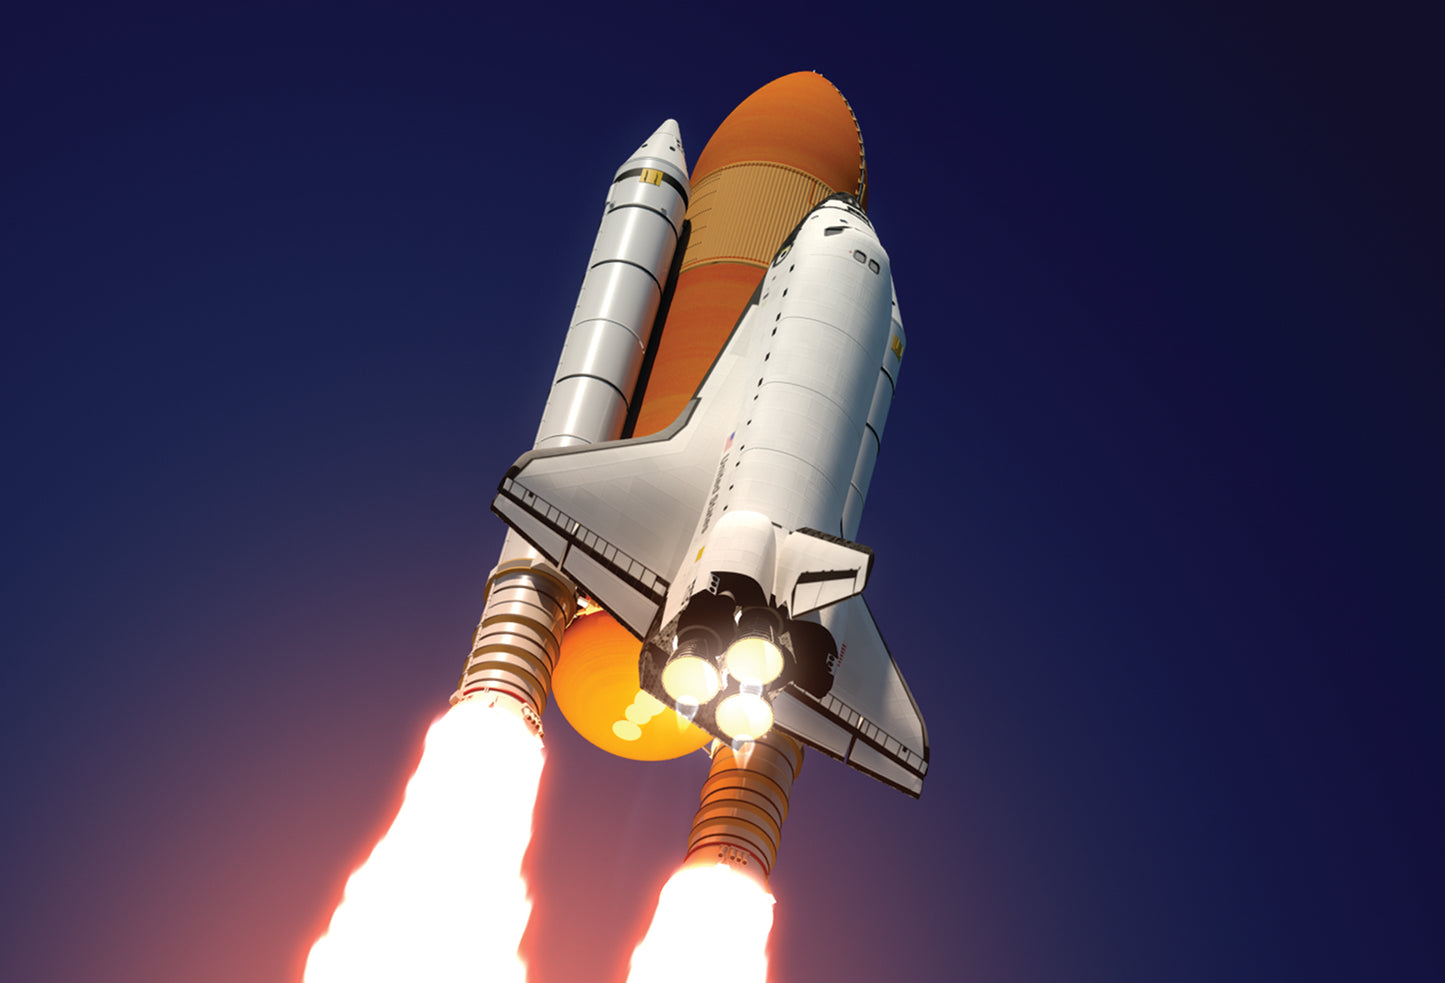 SKU : 20333 - Space Shuttle - Motion Postcard